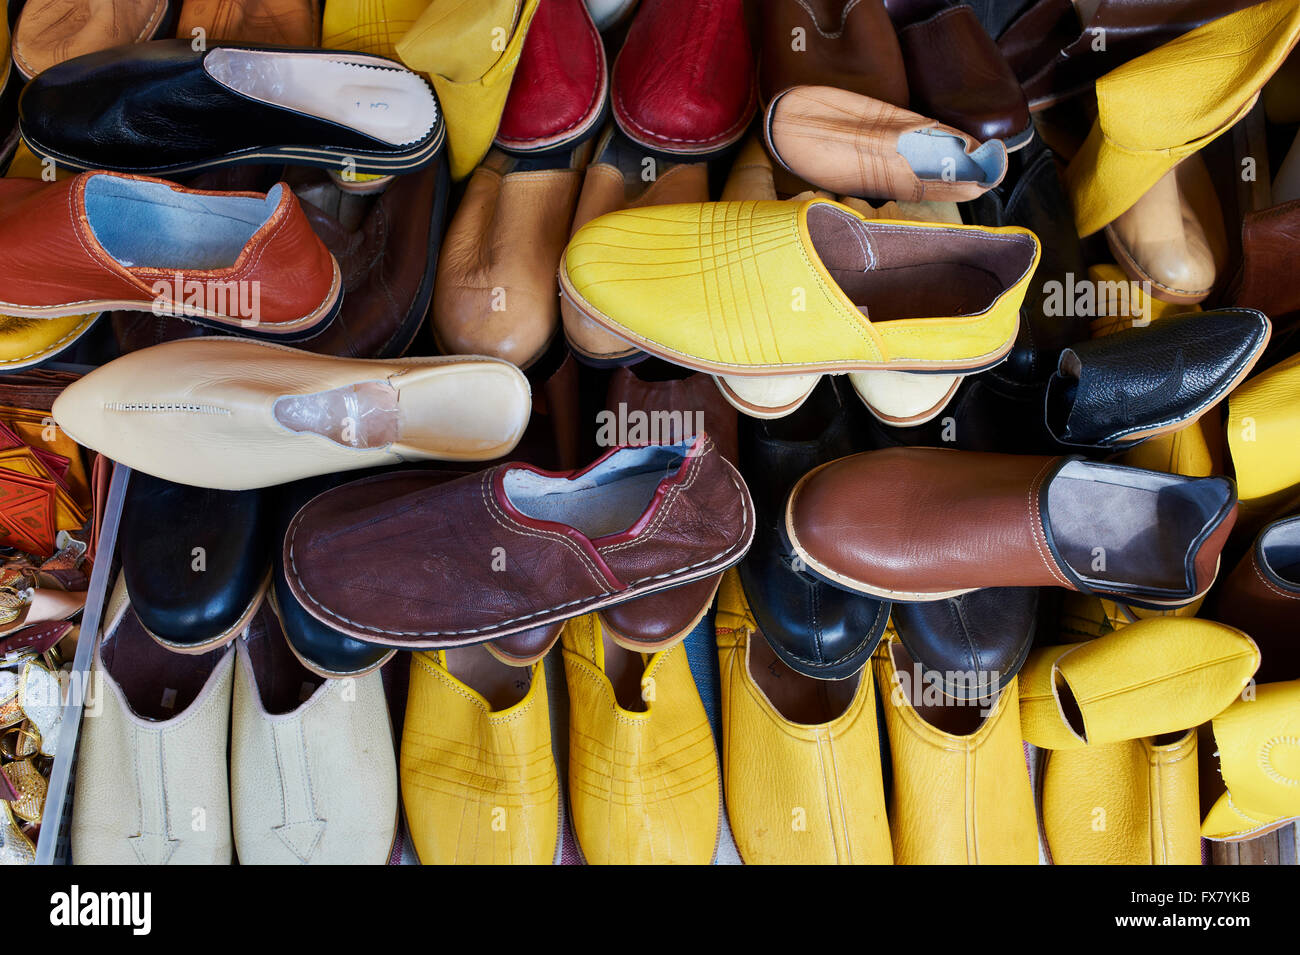 Morocco, Tangier, babouche slipper shop Stock Photo